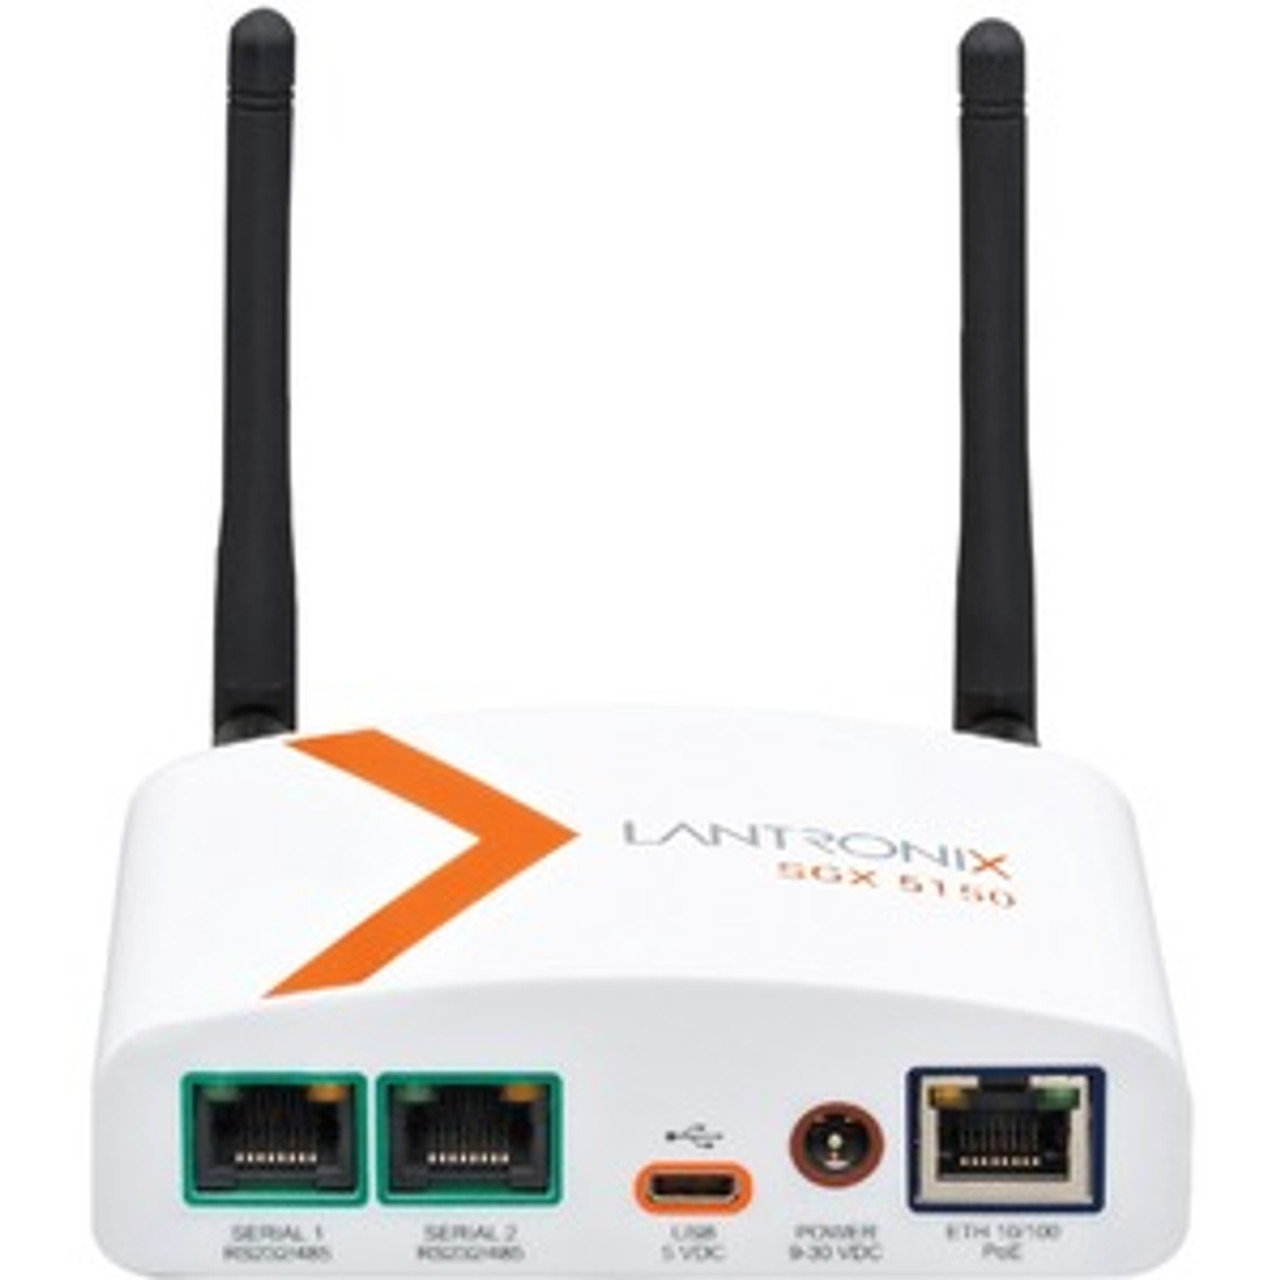 SGX5150222ES Lantronix SGX 5150 IoT Device Gateway 802.11a/b/g/n/ac Dual Band desktop wireless Router (Refurbished)